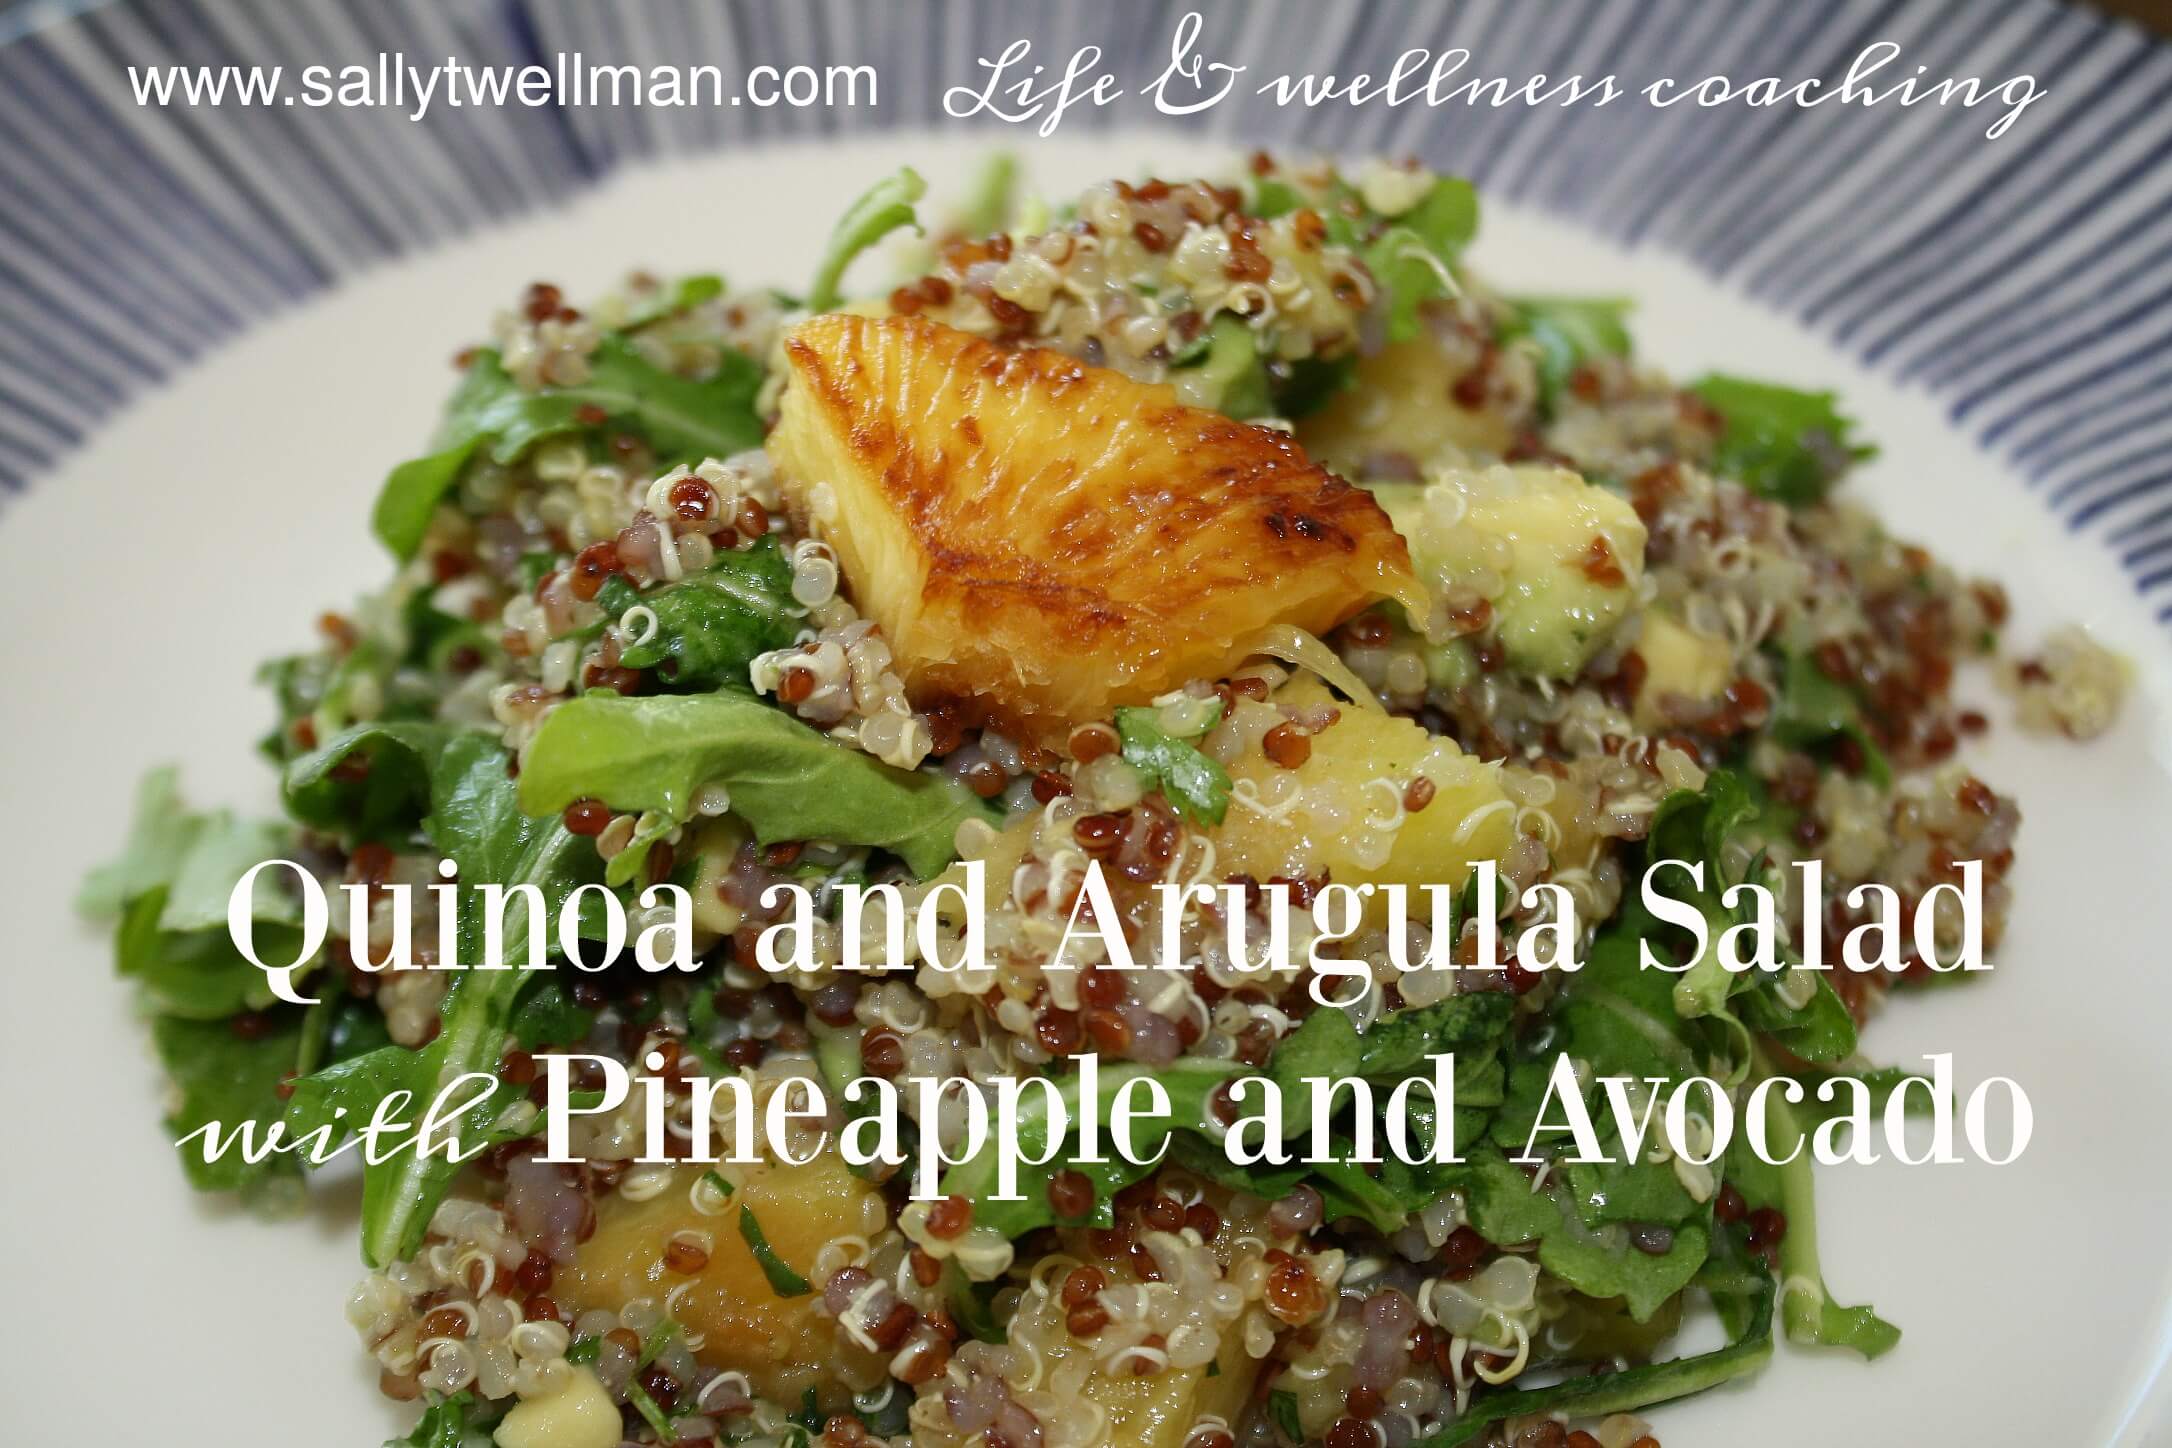 Quinoa and Arugula Salad with Pineapple and Avocado